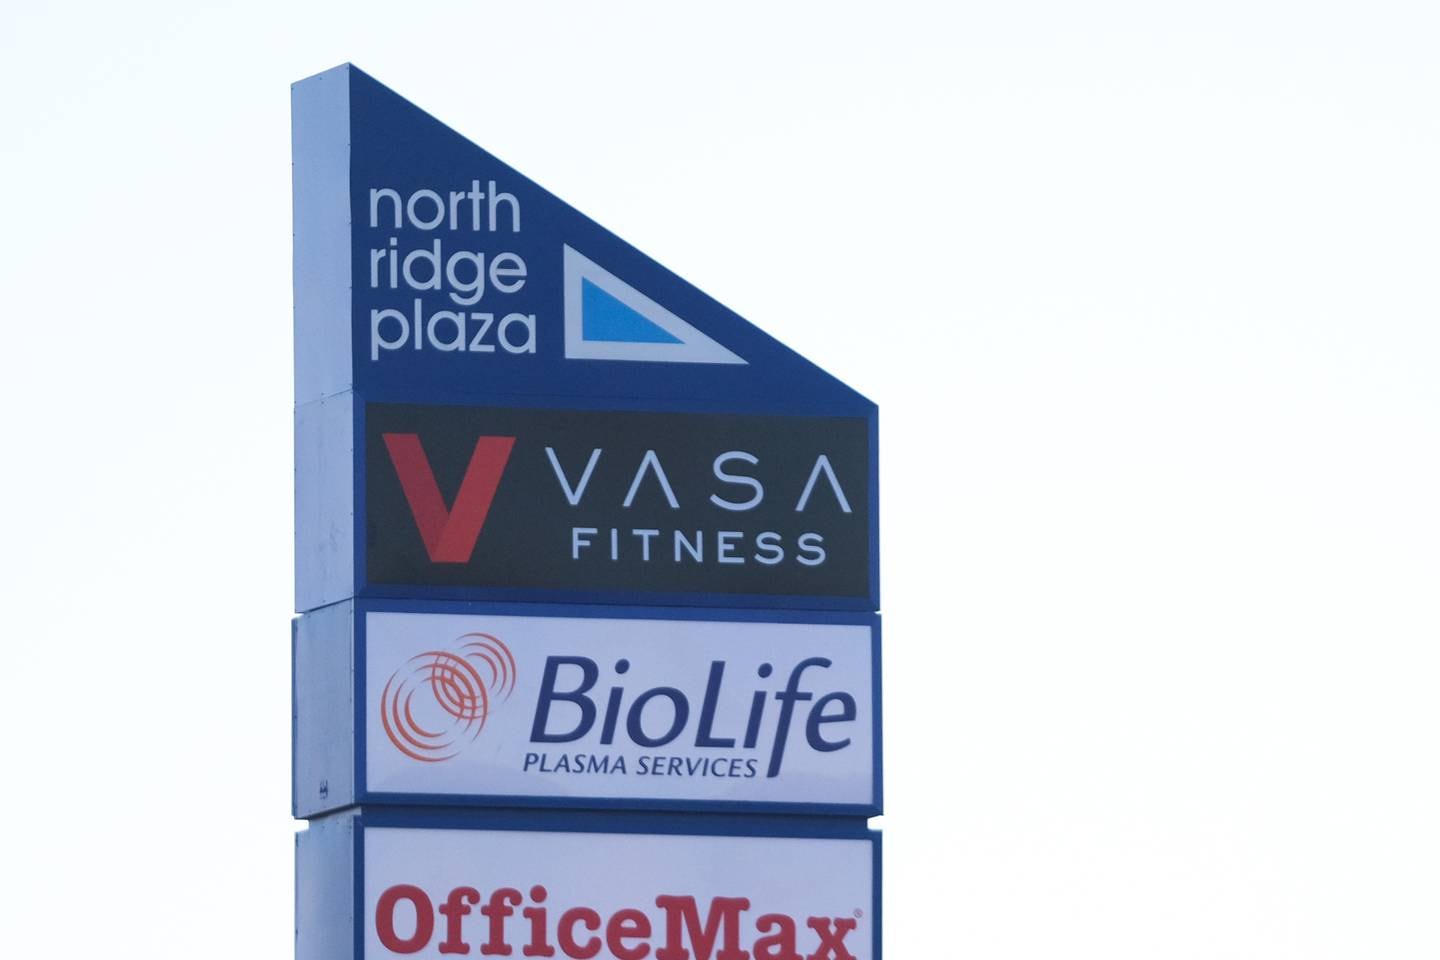 VASA Fitness opened a new location in the North Ridge Plaza in Joliet. Friday, Feb. 11, 2022, in Joliet.